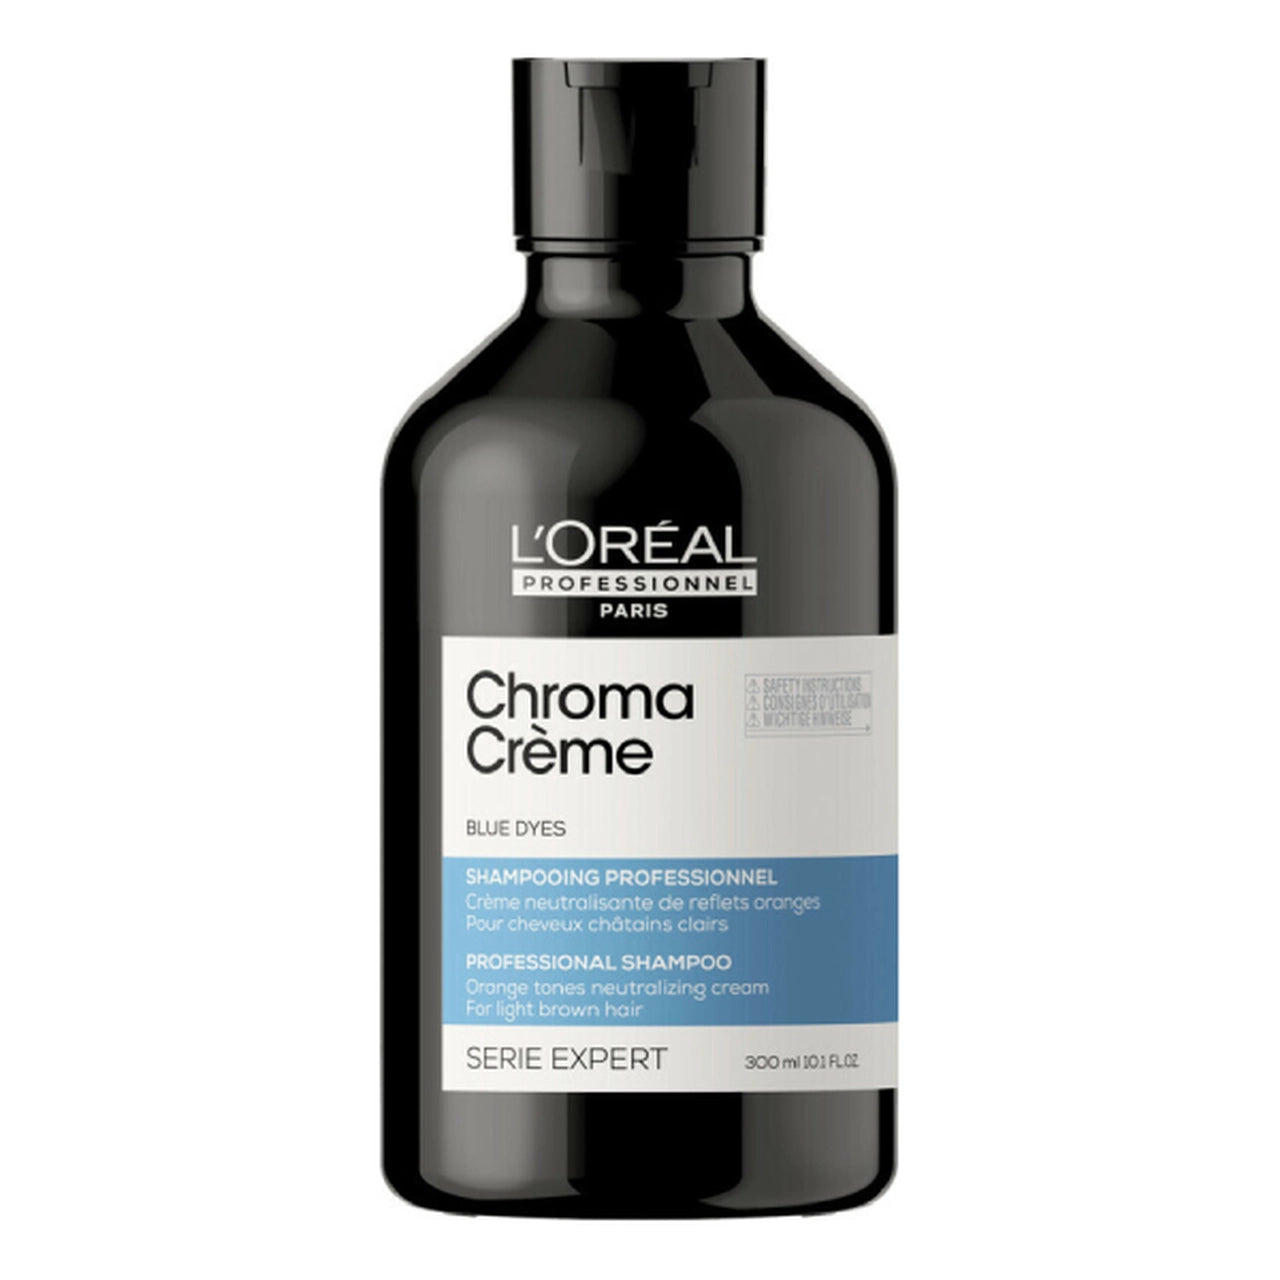 L'Oréal Chroma Creme - Blue Dyes